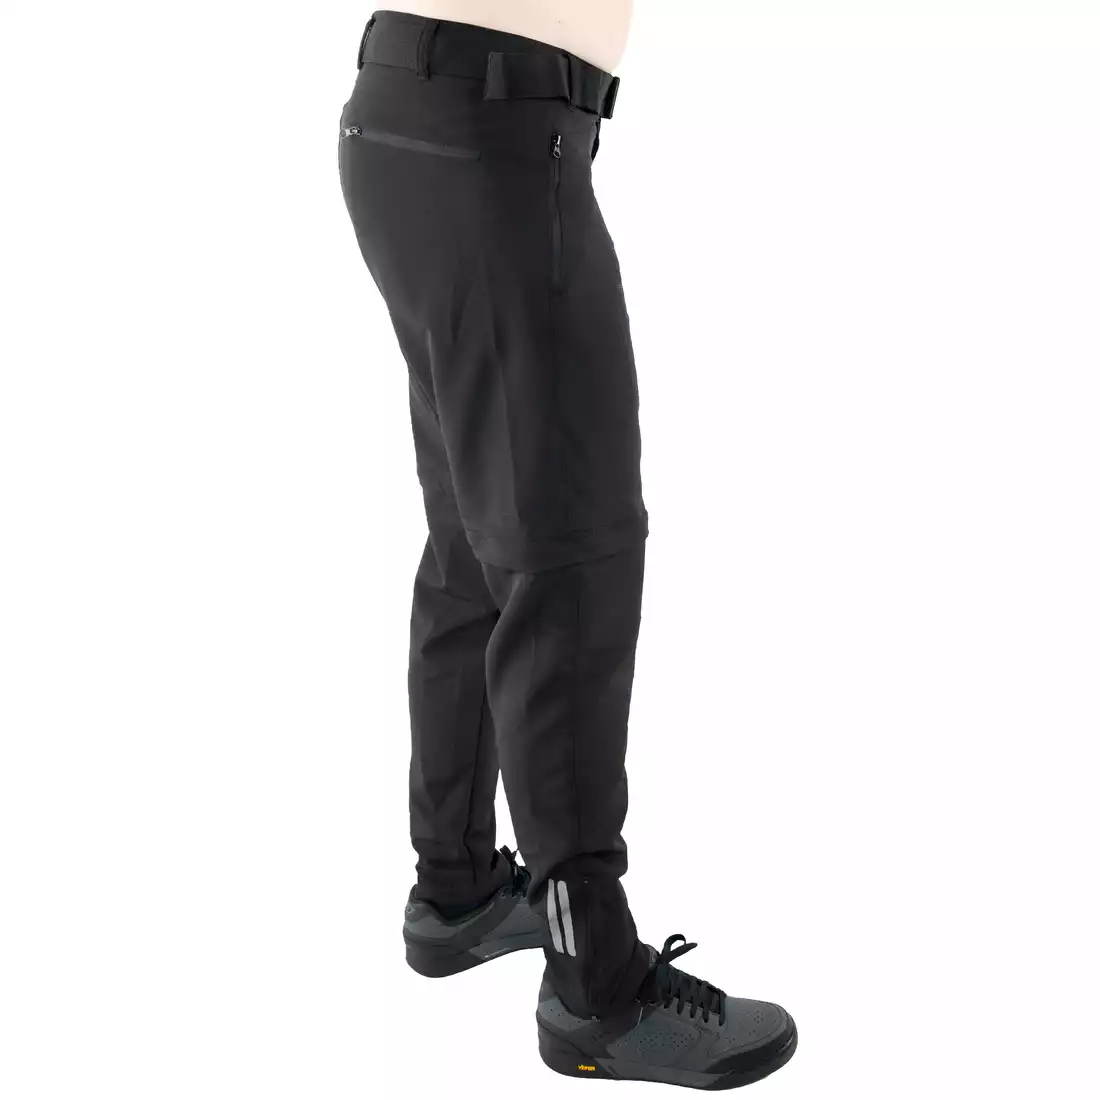 KAYMAQ STR-M-001 male bicycle pants with detachable legs, black